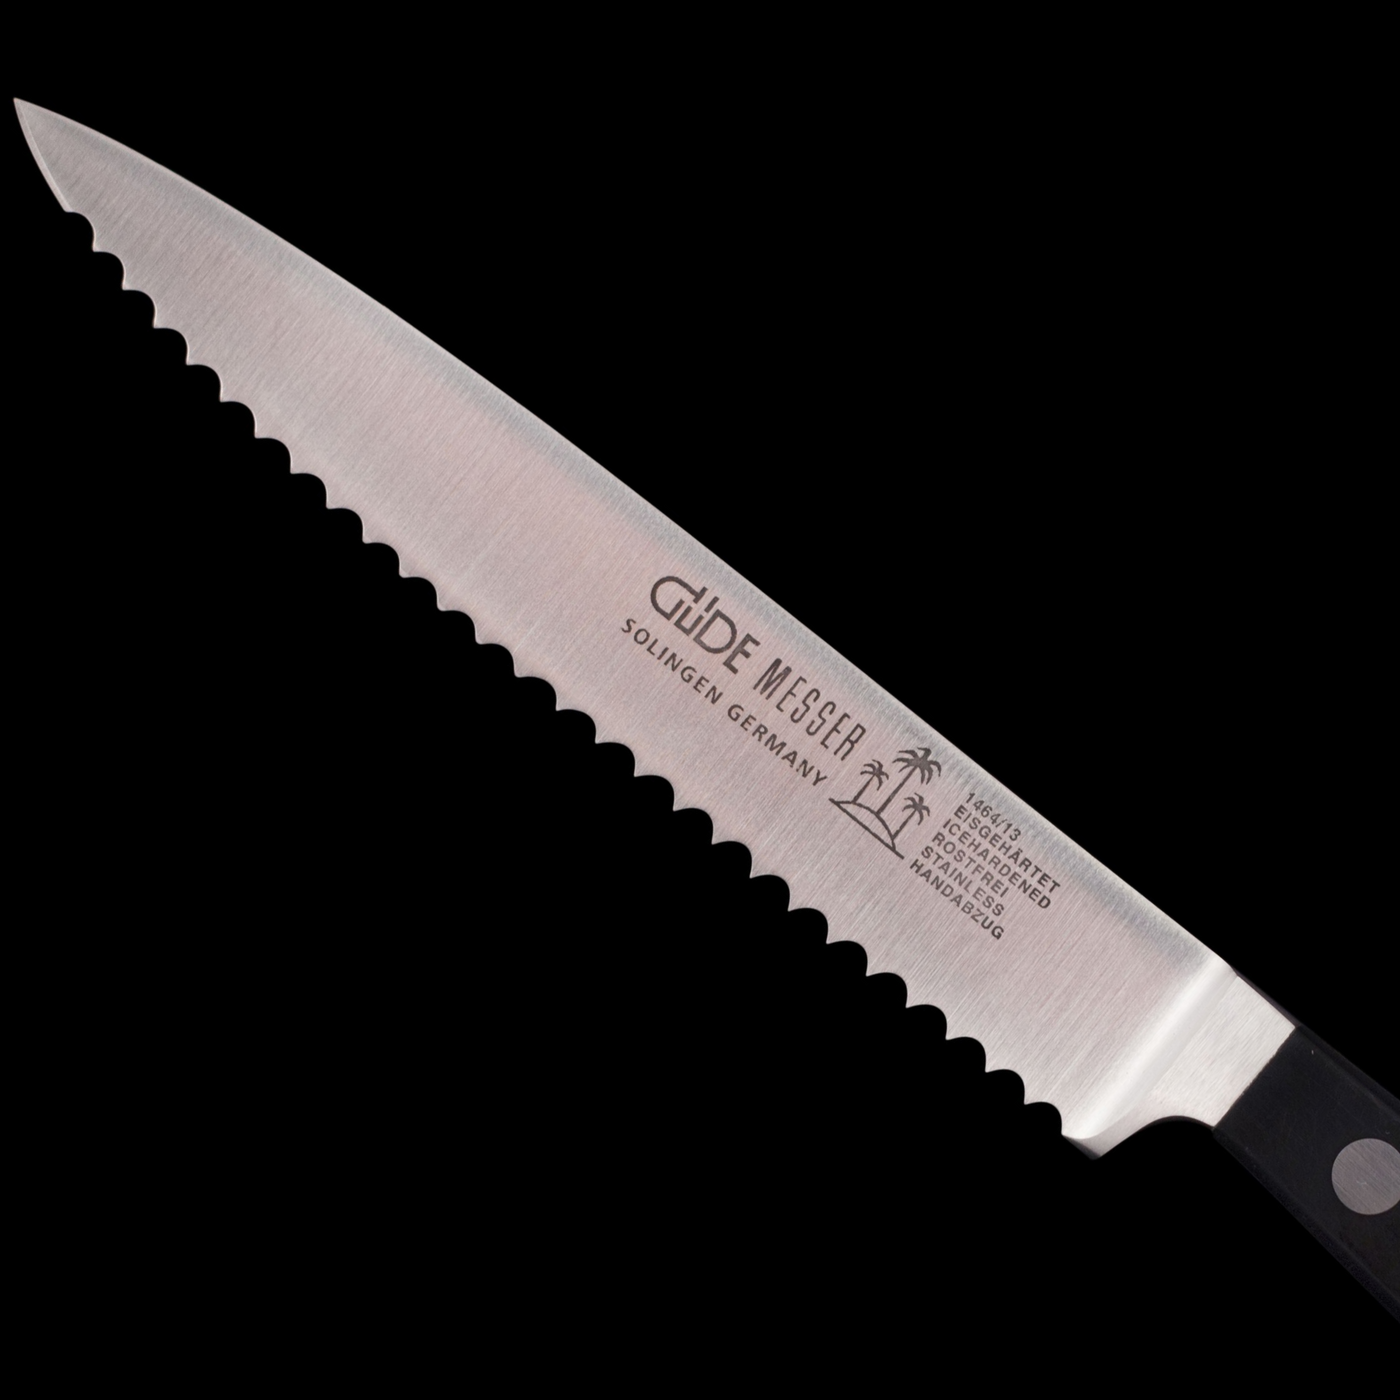 Gude Alpha Tomato Knife With Black Hostaform Handle, 5-in - Kitchen Universe